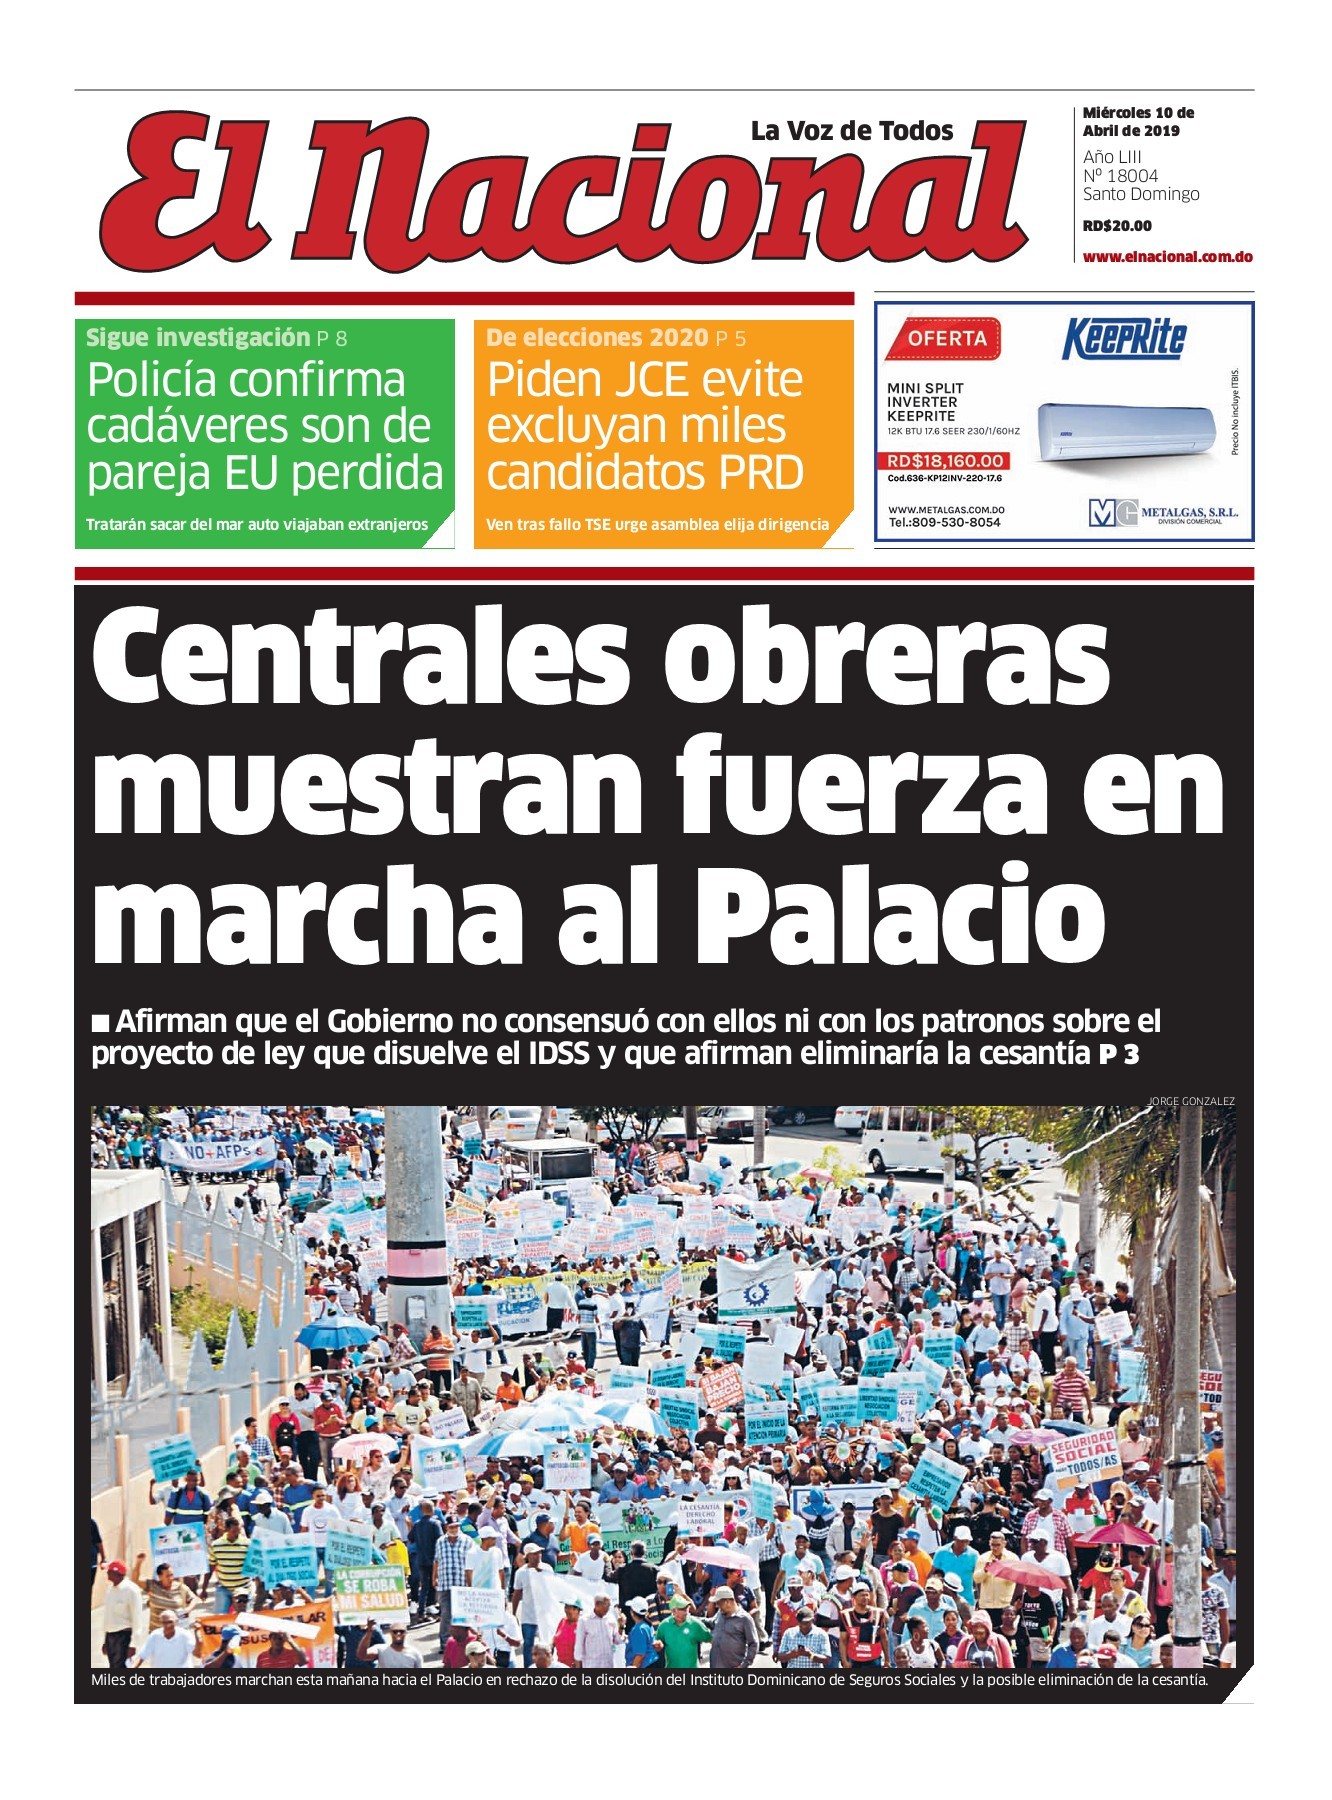 Portada Periódico El Nacional, Miércoles 10 Abril 2019